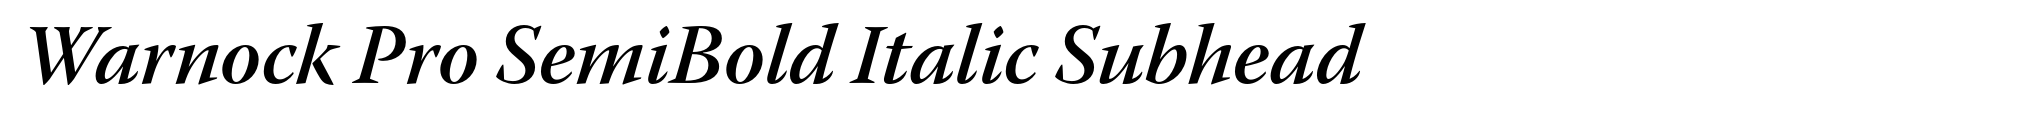 Warnock Pro SemiBold Italic Subhead image